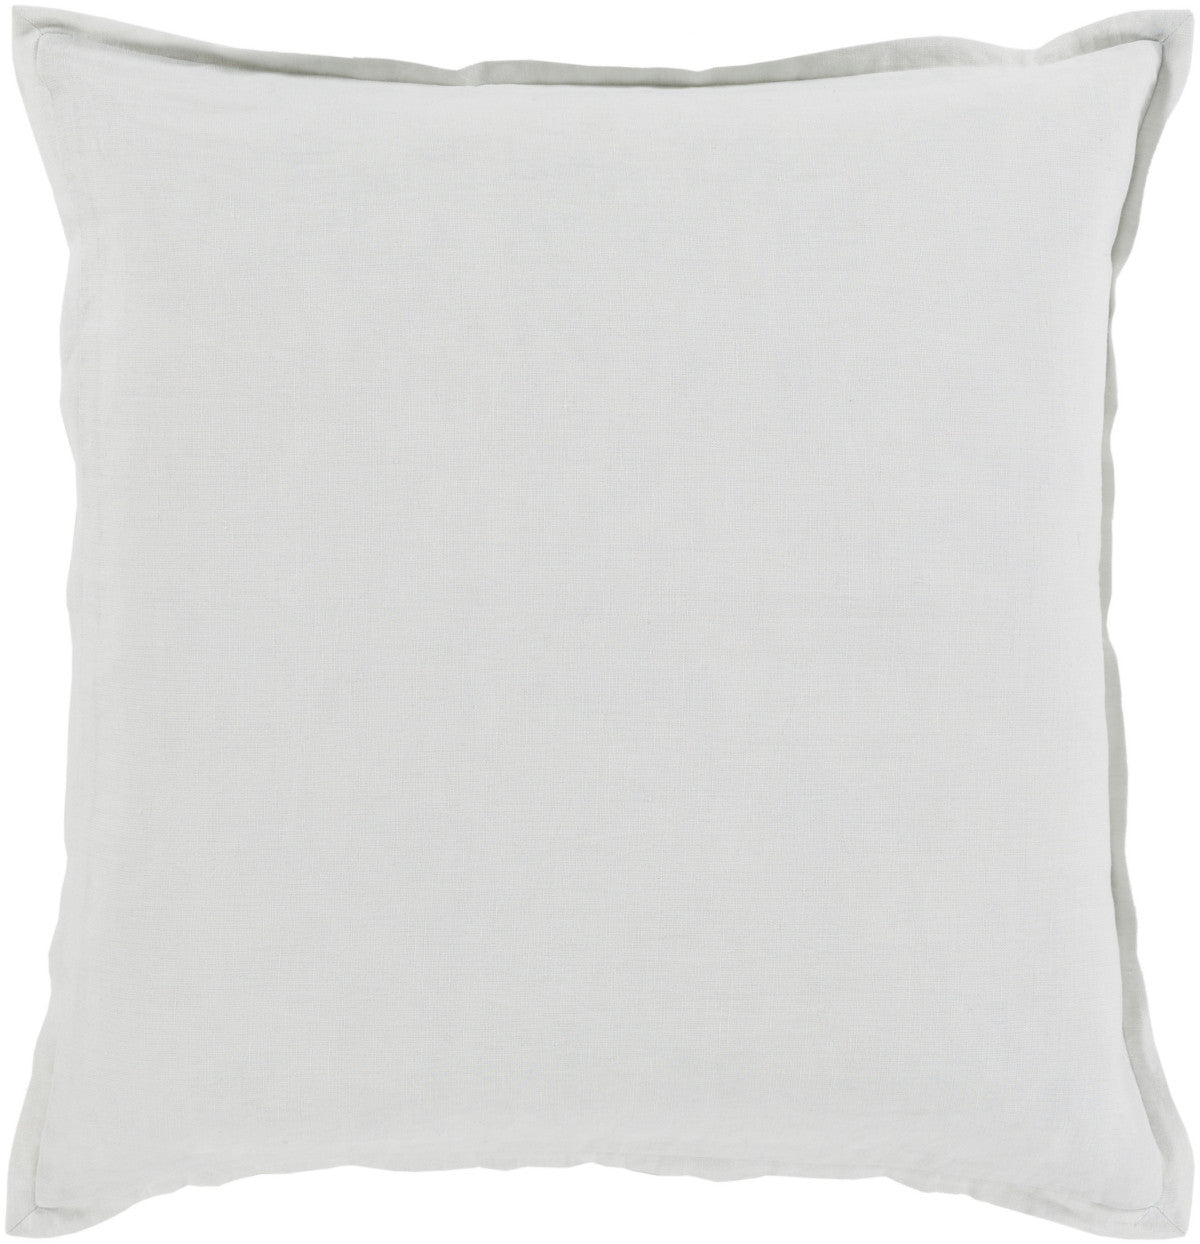 Surya Orianna OR007 Pillow